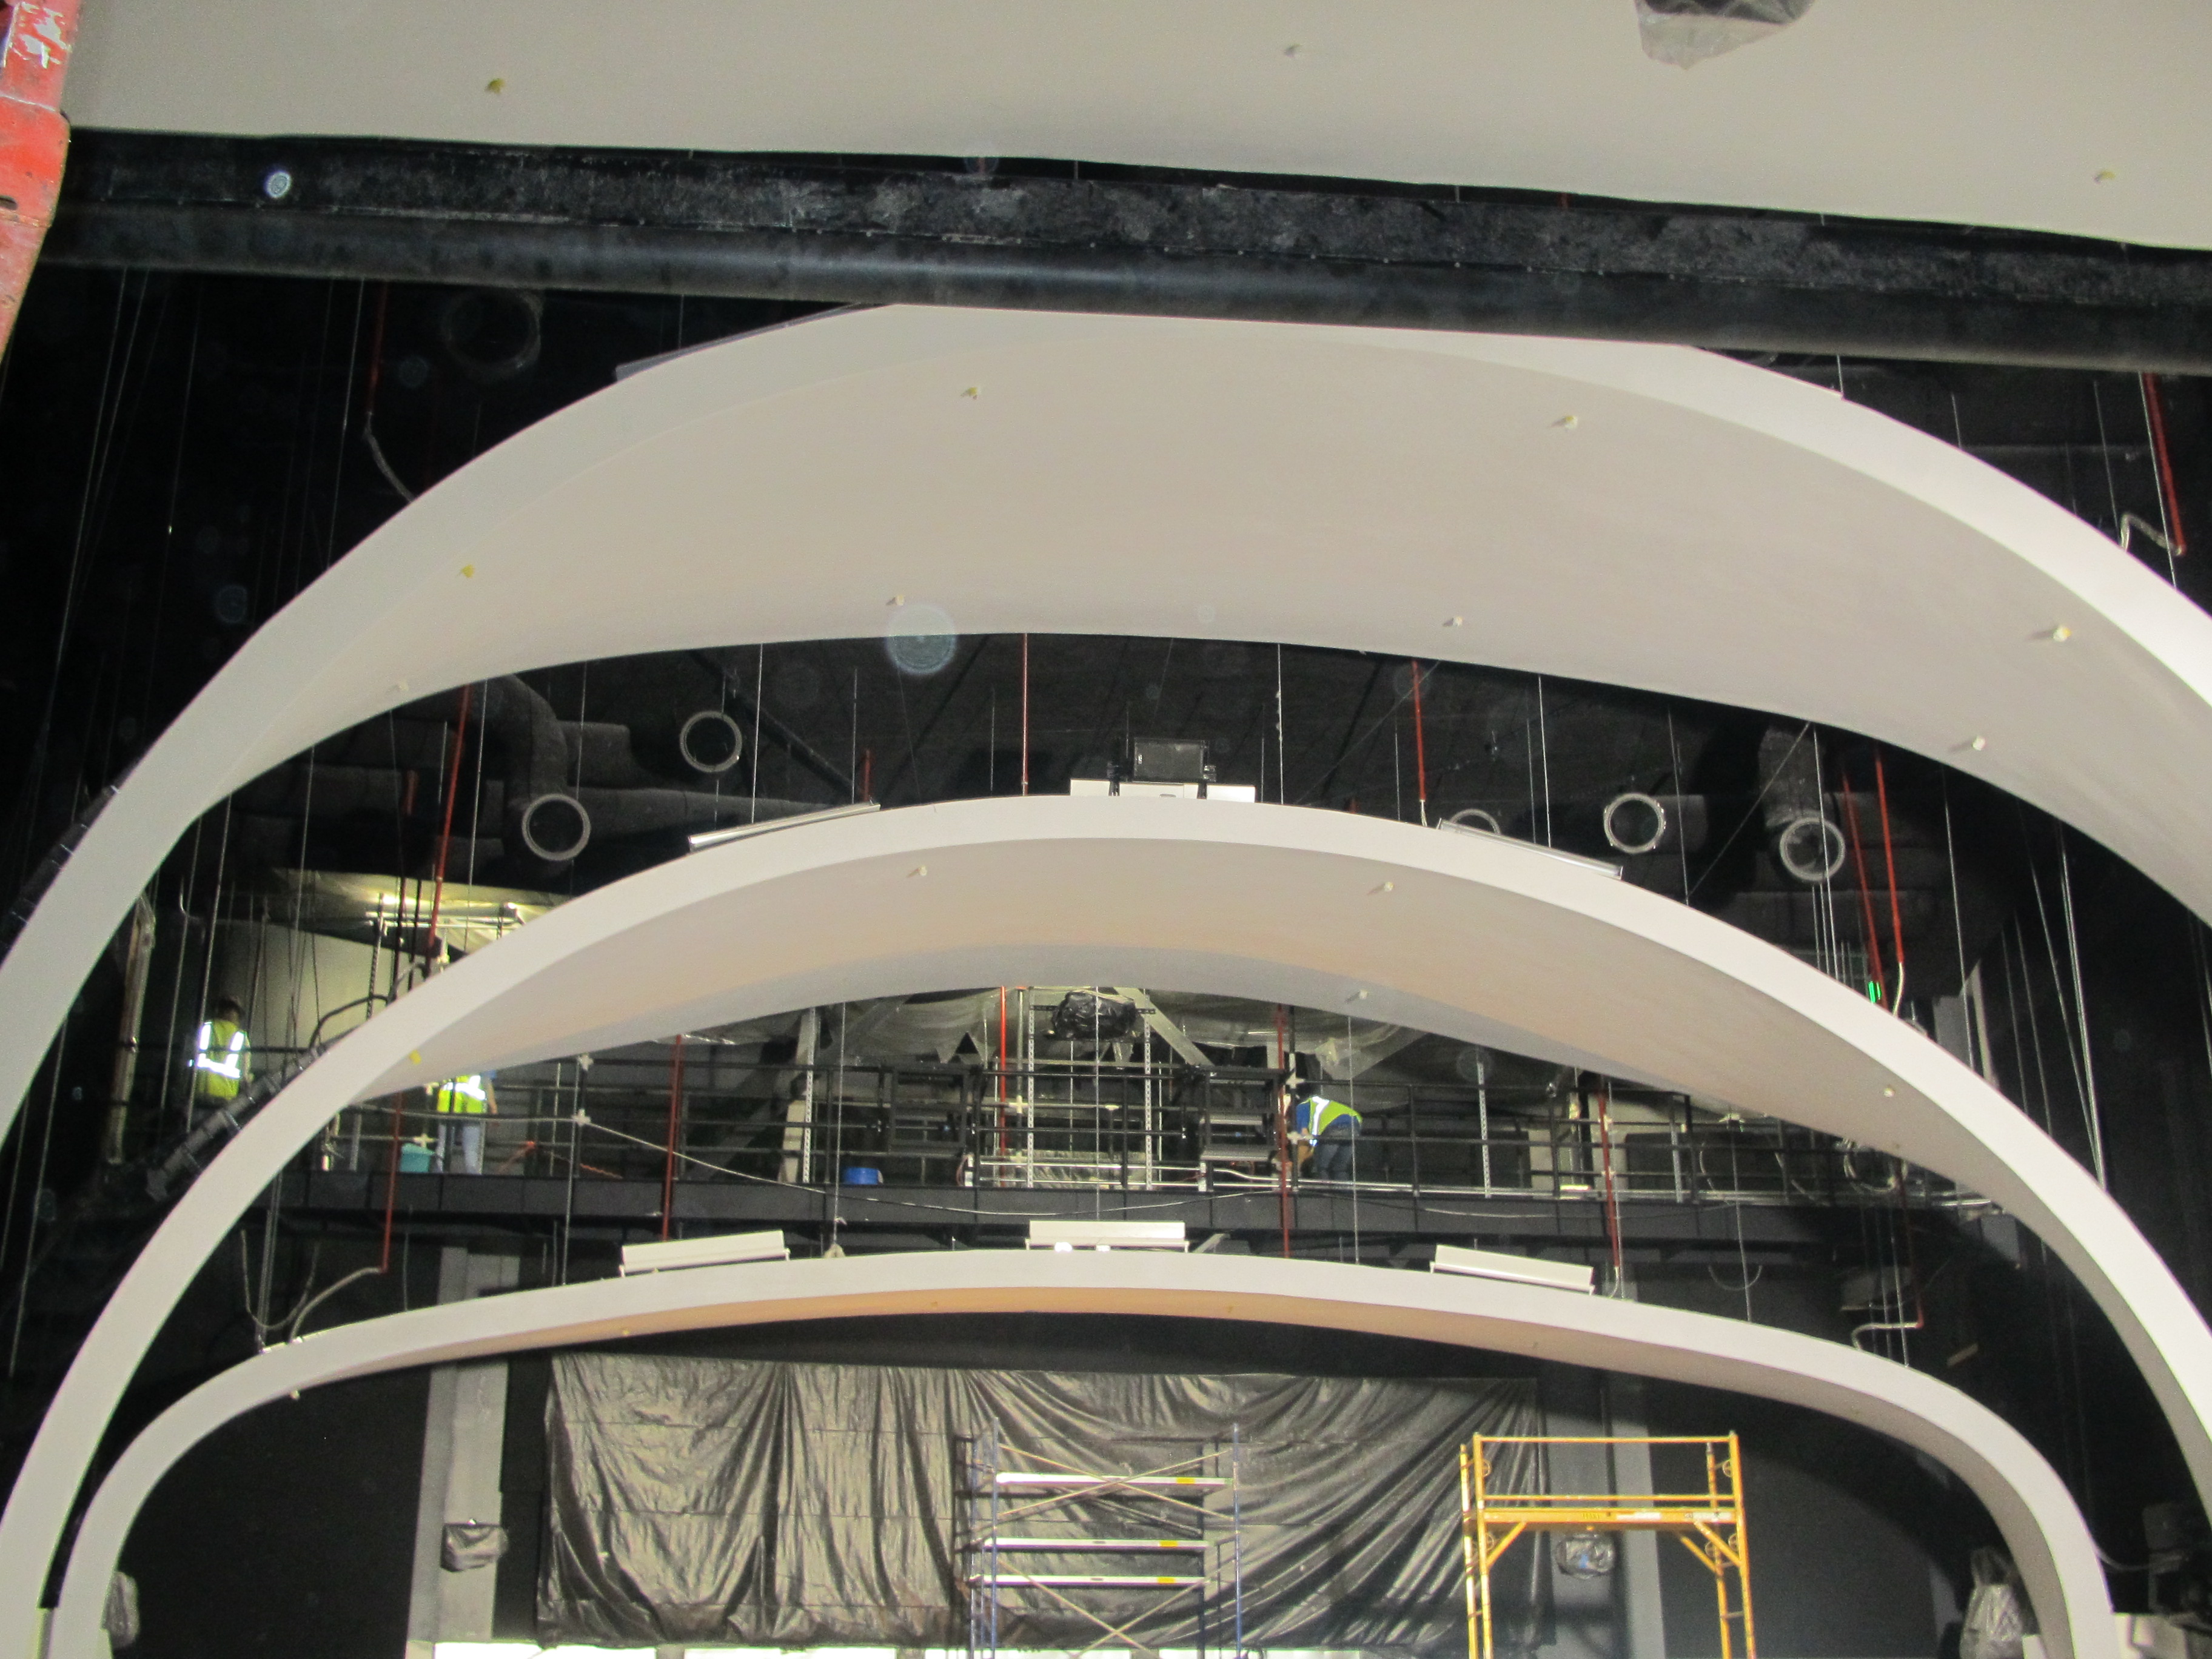 Atlantis Space center Fellert Acoustic Plaster arched Screens